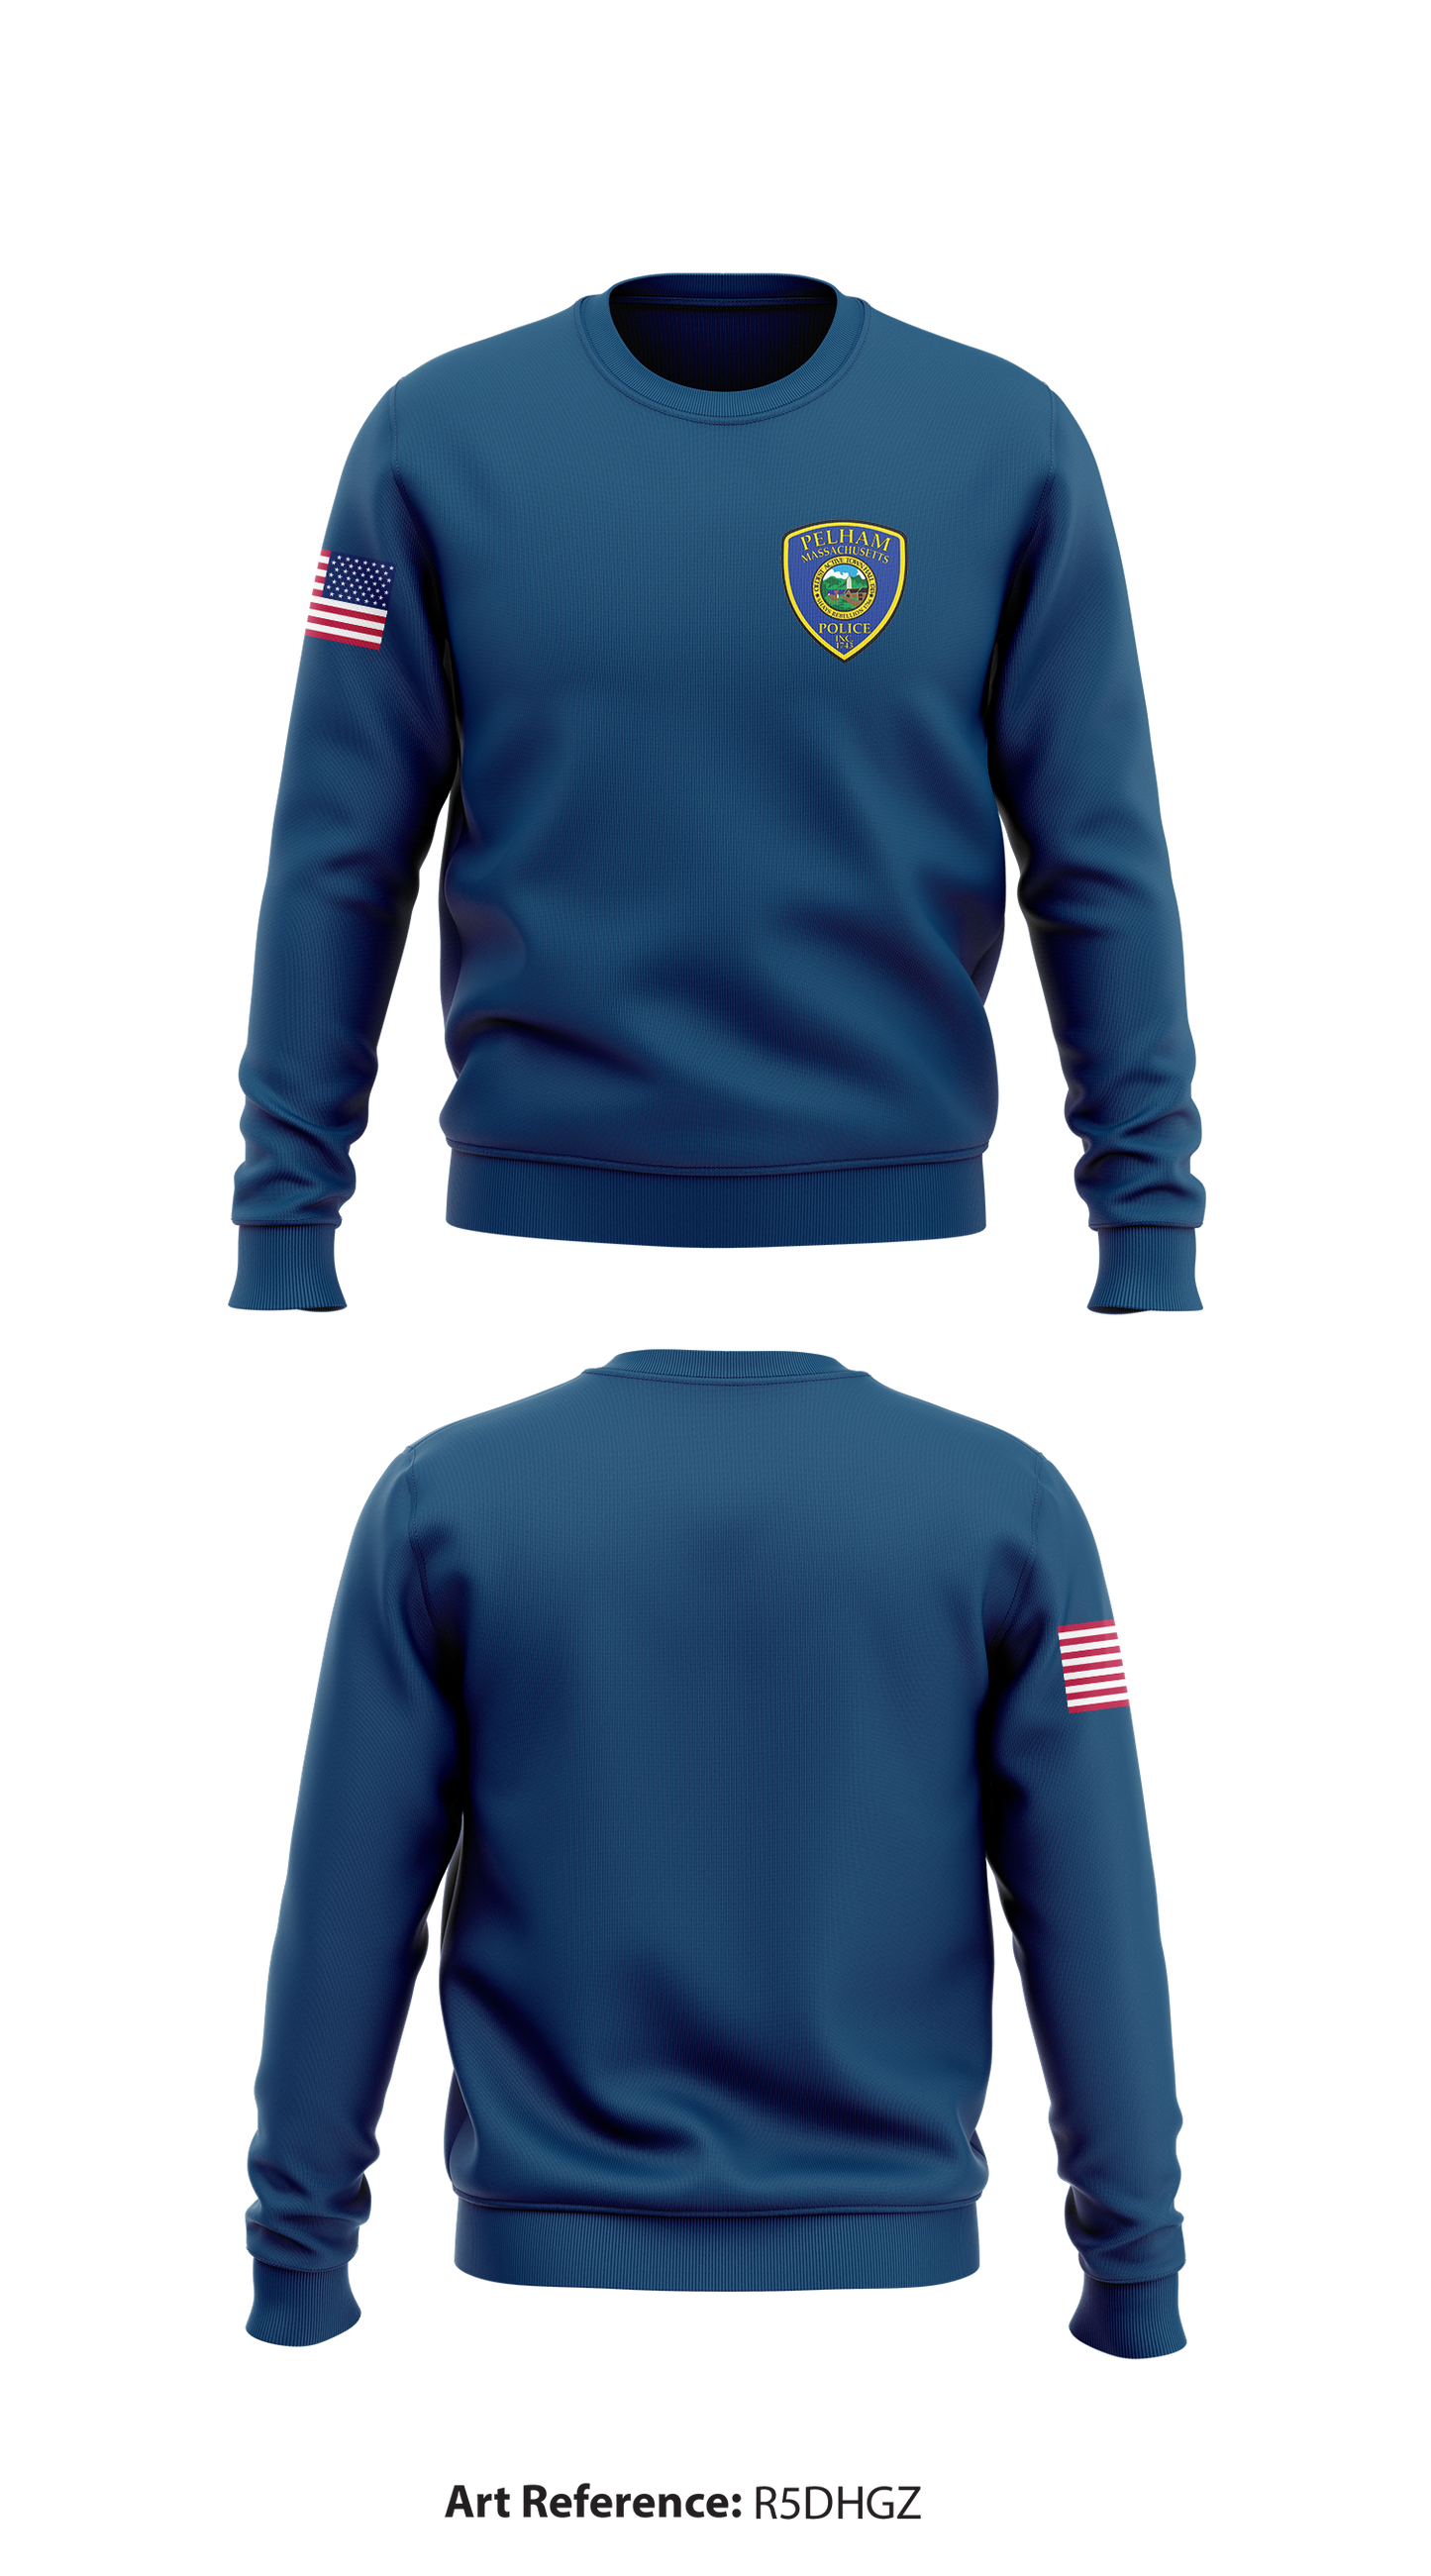 Pelham Police Department, Pelham Massachusetts  Store 1 Core Men's Crewneck Performance Sweatshirt - R5DhGZ